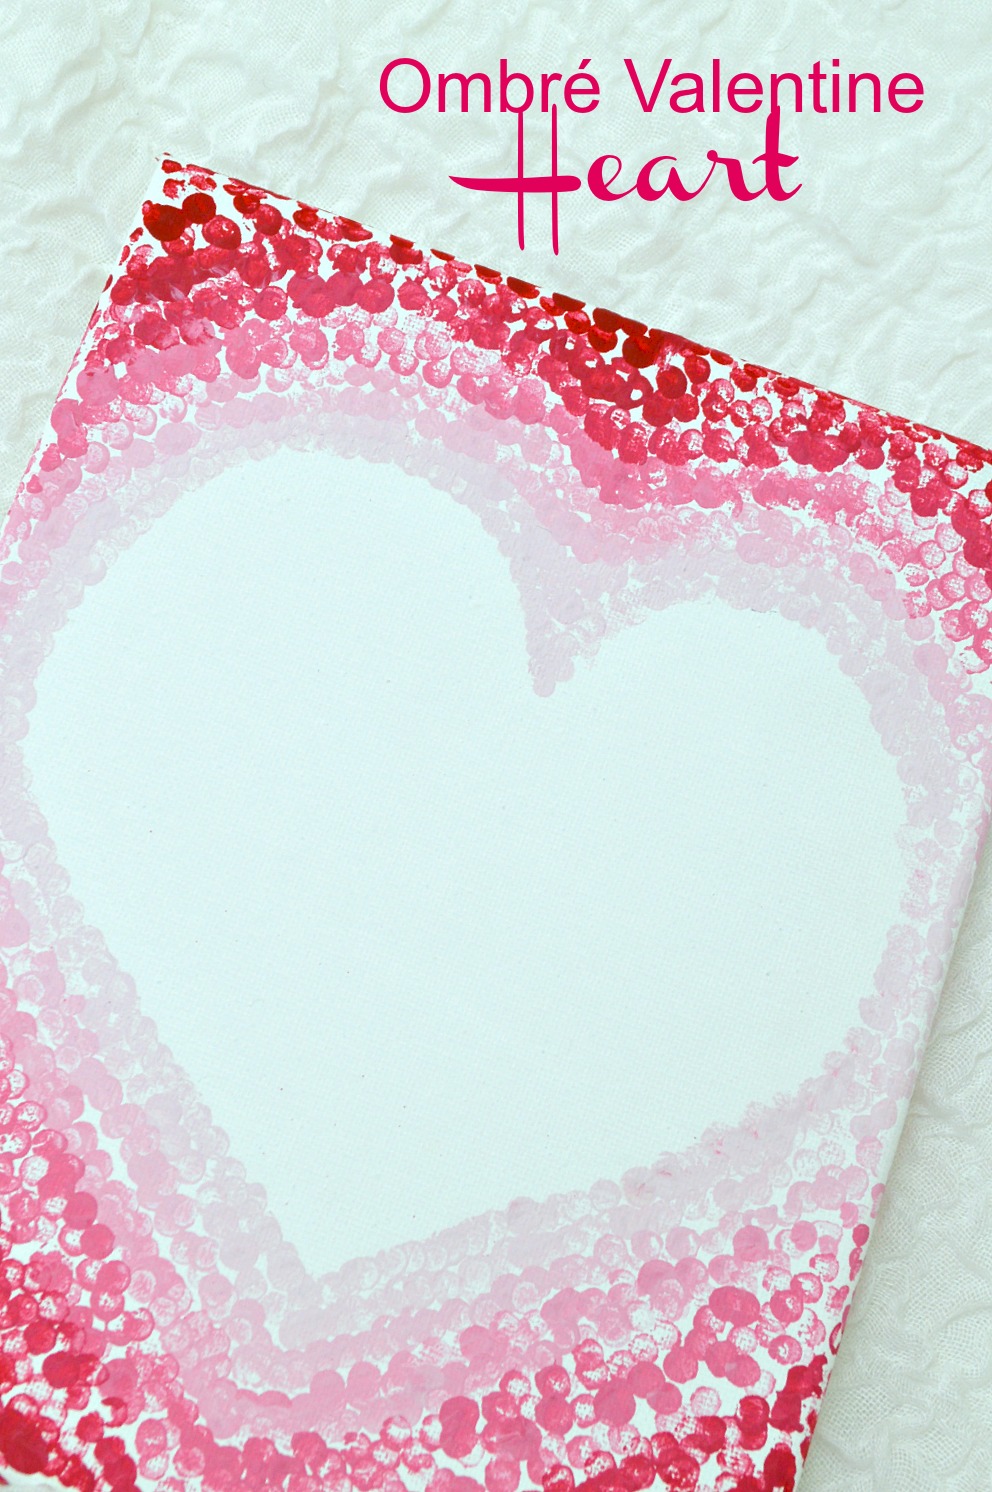 Ombré Valentine Heart Using Eraser Dot Art